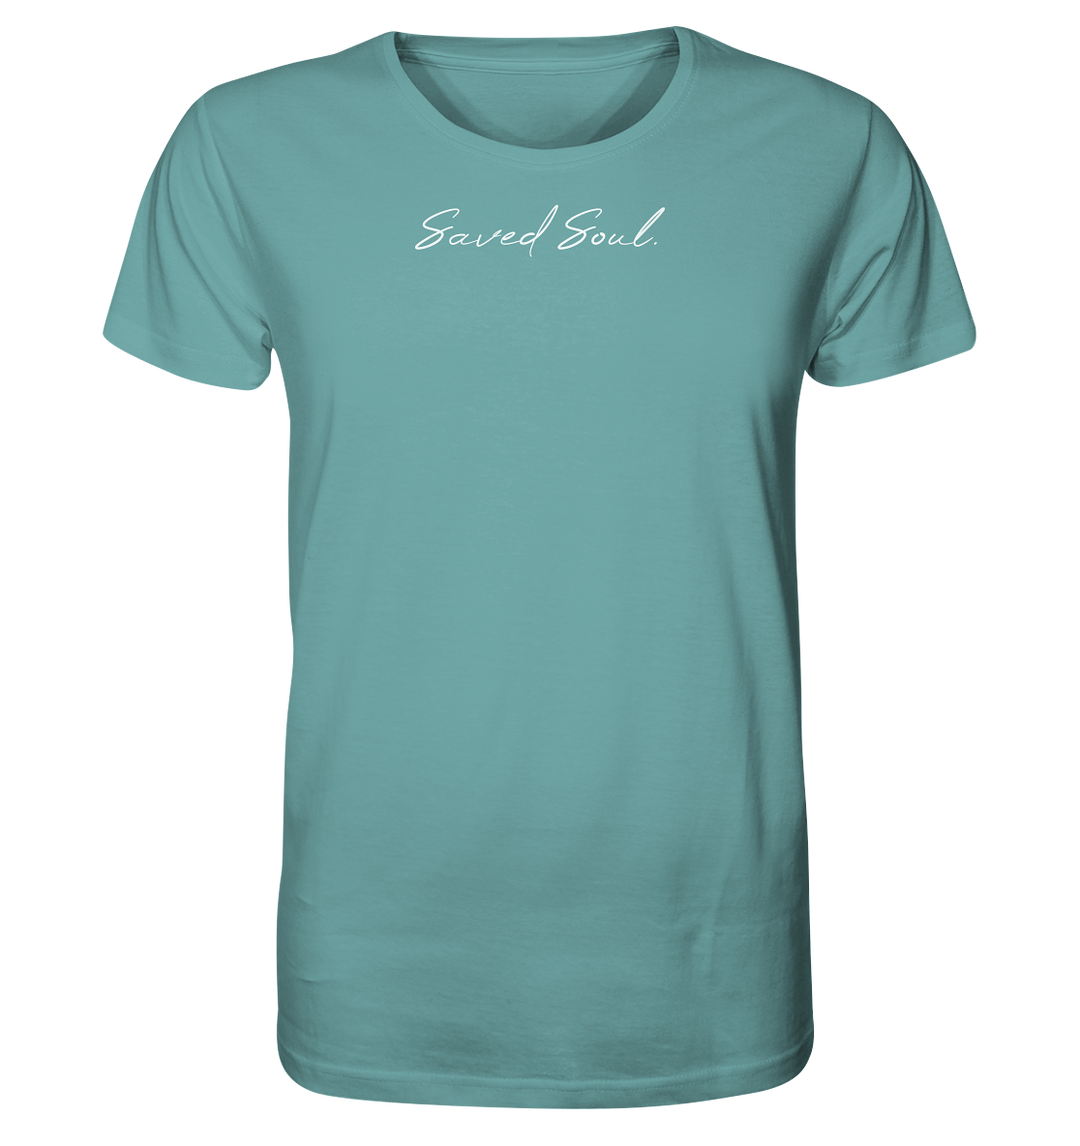 Saved Soul - Bio-Shirt, Männer